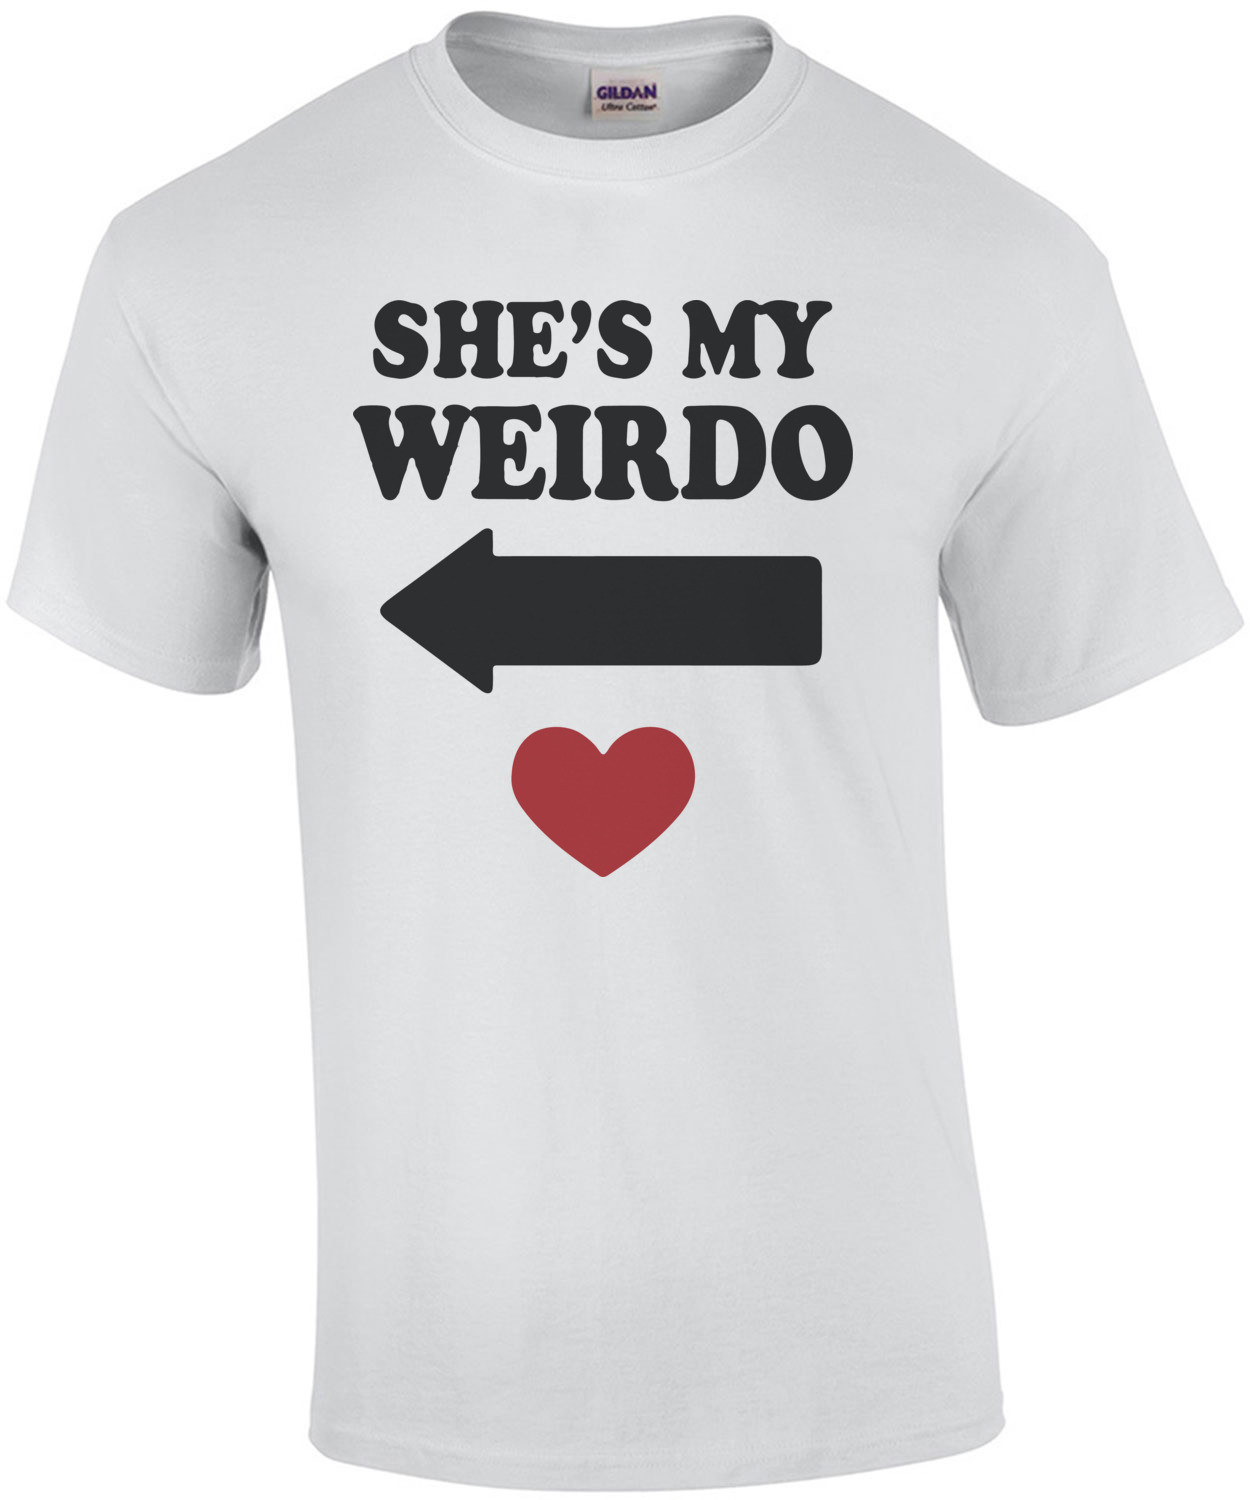 She's My Weirdo T-Shirt